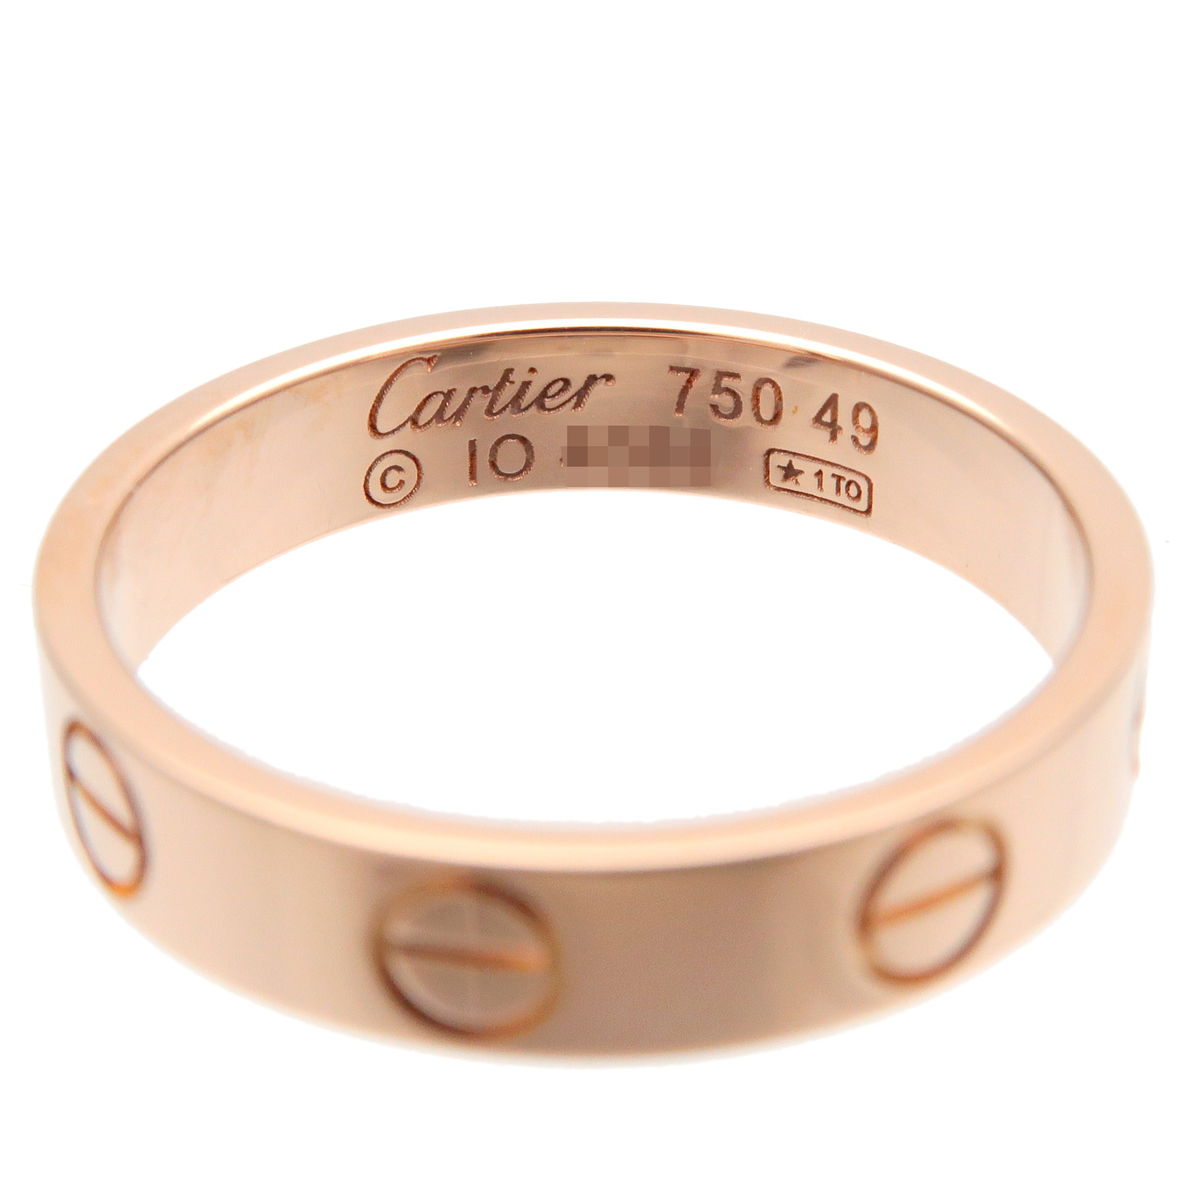 Cartier-Mini-Love-Ring-K18PG-750-Rose-Gold-#49-US5-EU49-HK10.5